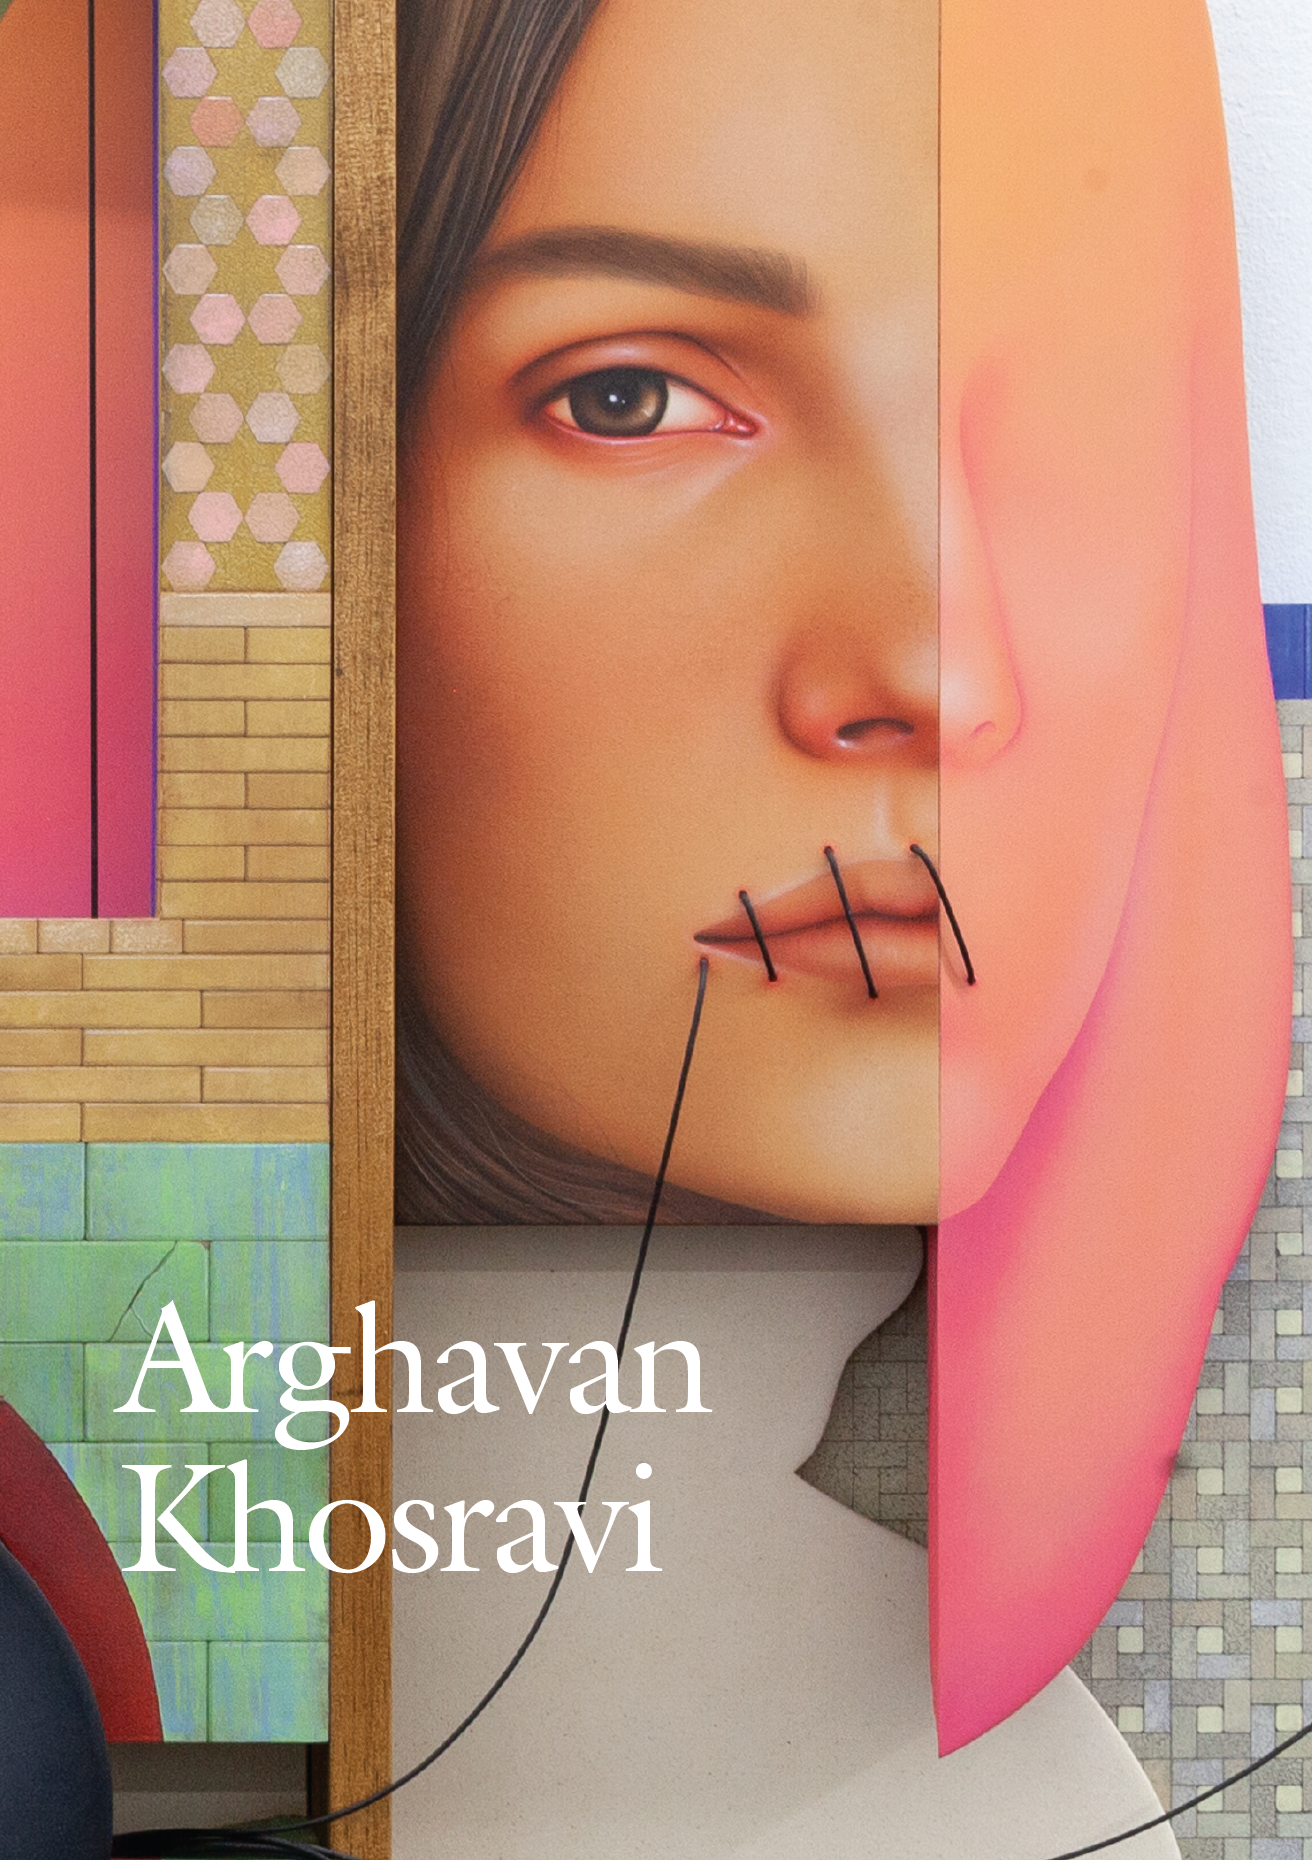 Arghavan Khosravi